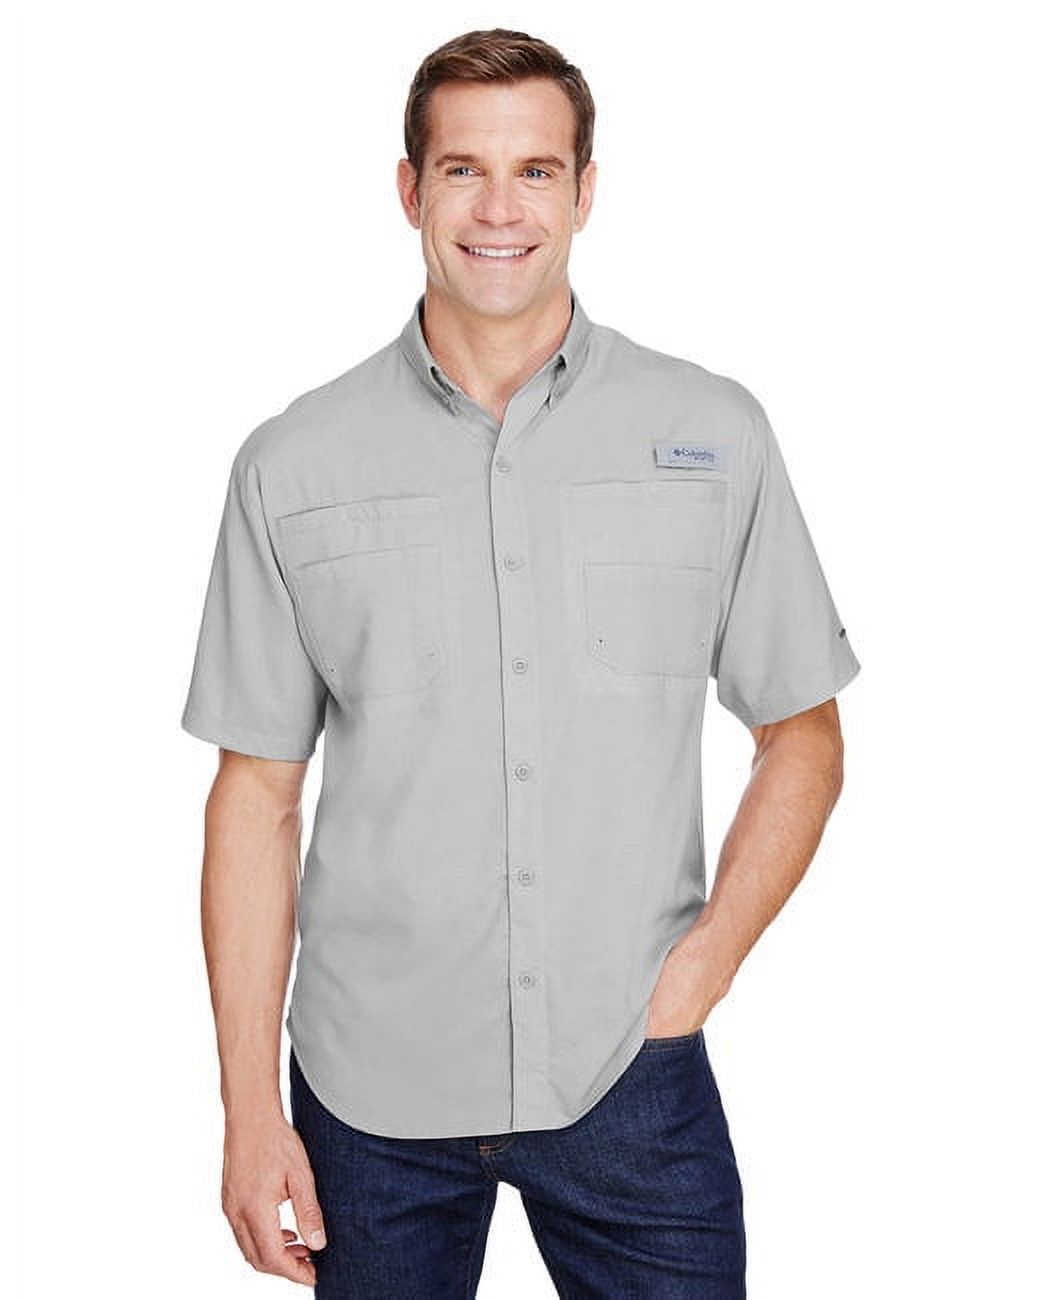 Columbia 7266 Men's Tamiami II Short-Sleeve Shirt - image 1 of 3